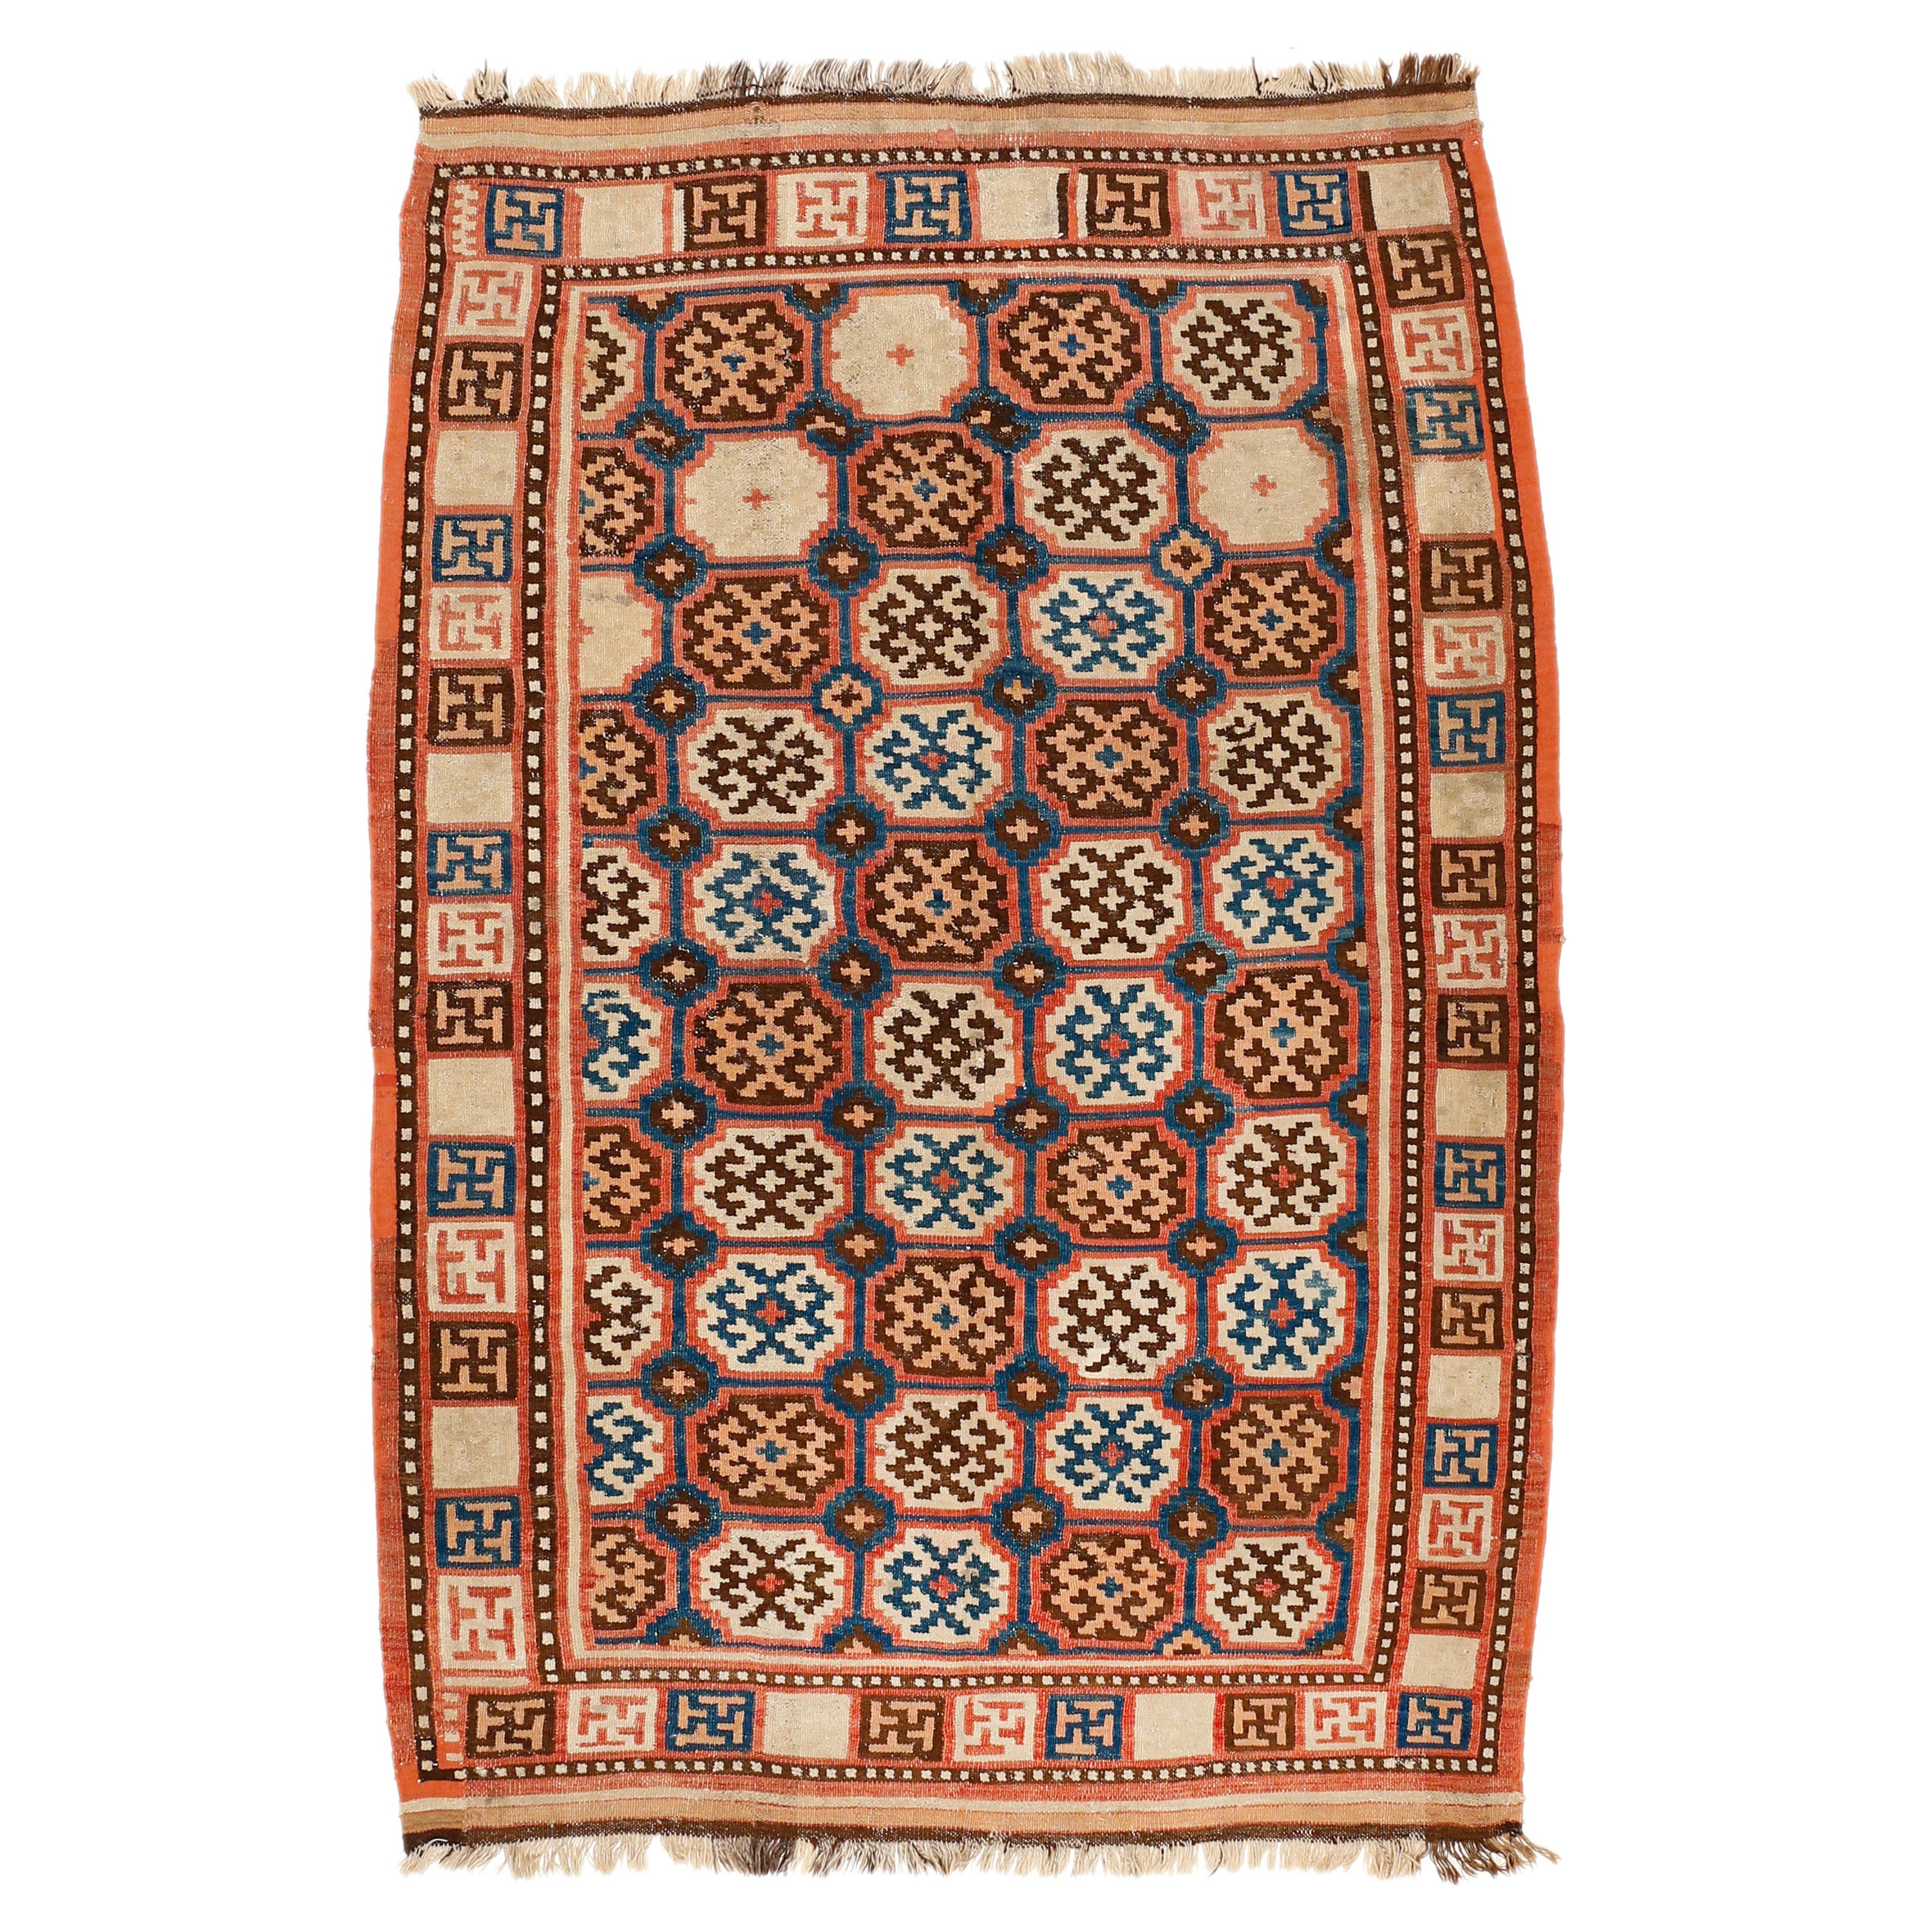 Rare and Unusual Antique Khotan Kilim Rug For Sale